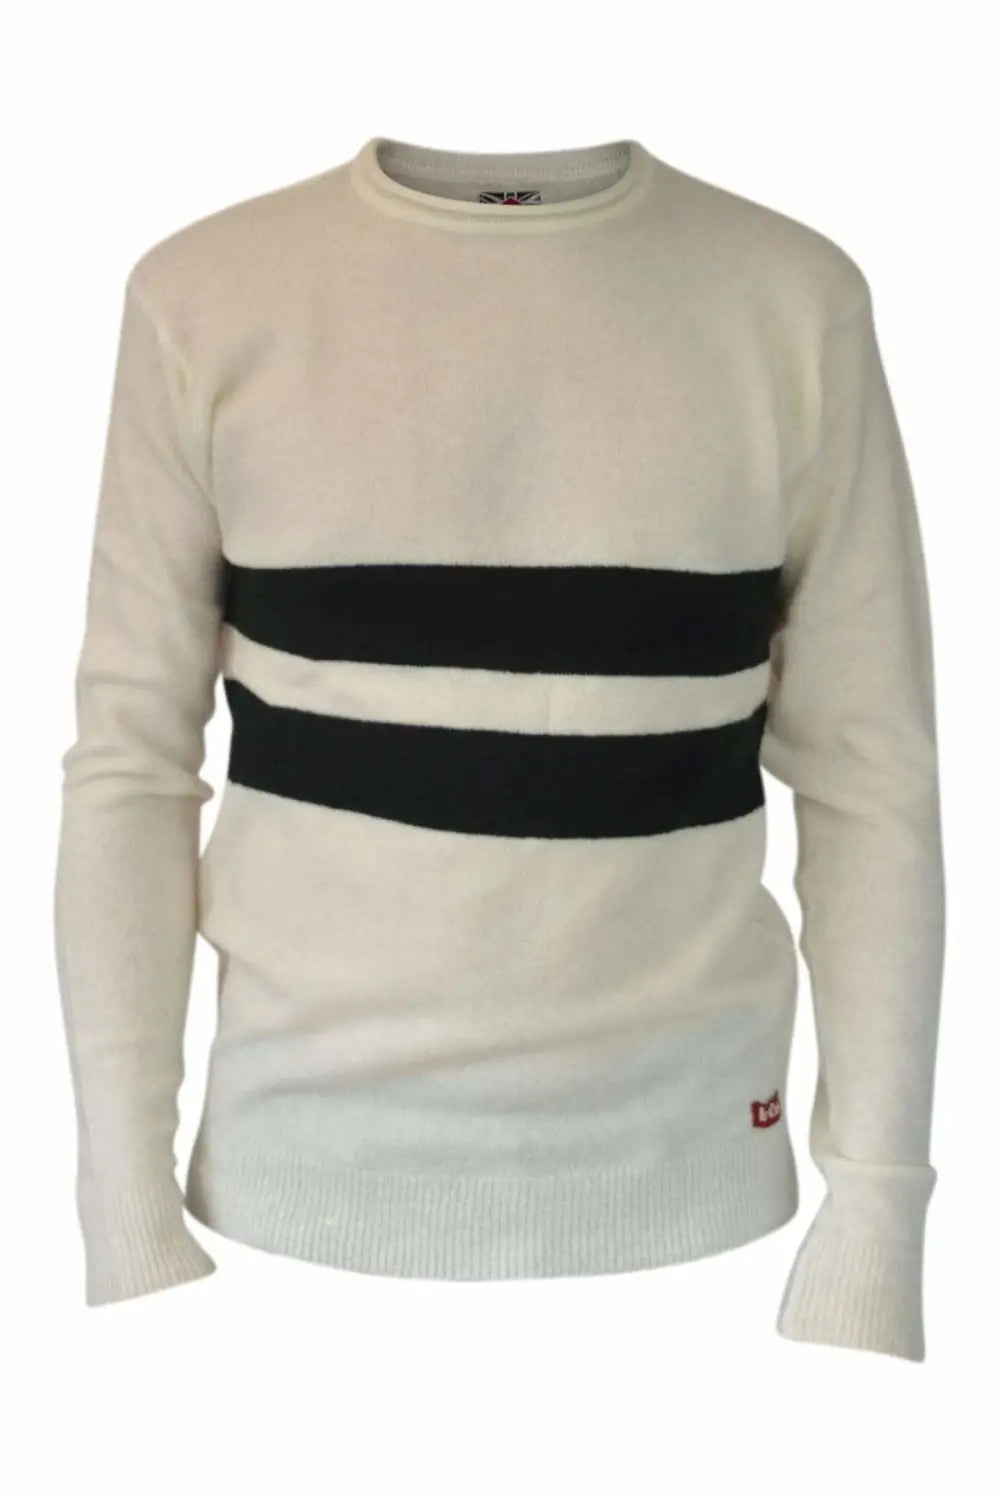 Lee Cooper Double Striped Fleece Sweater